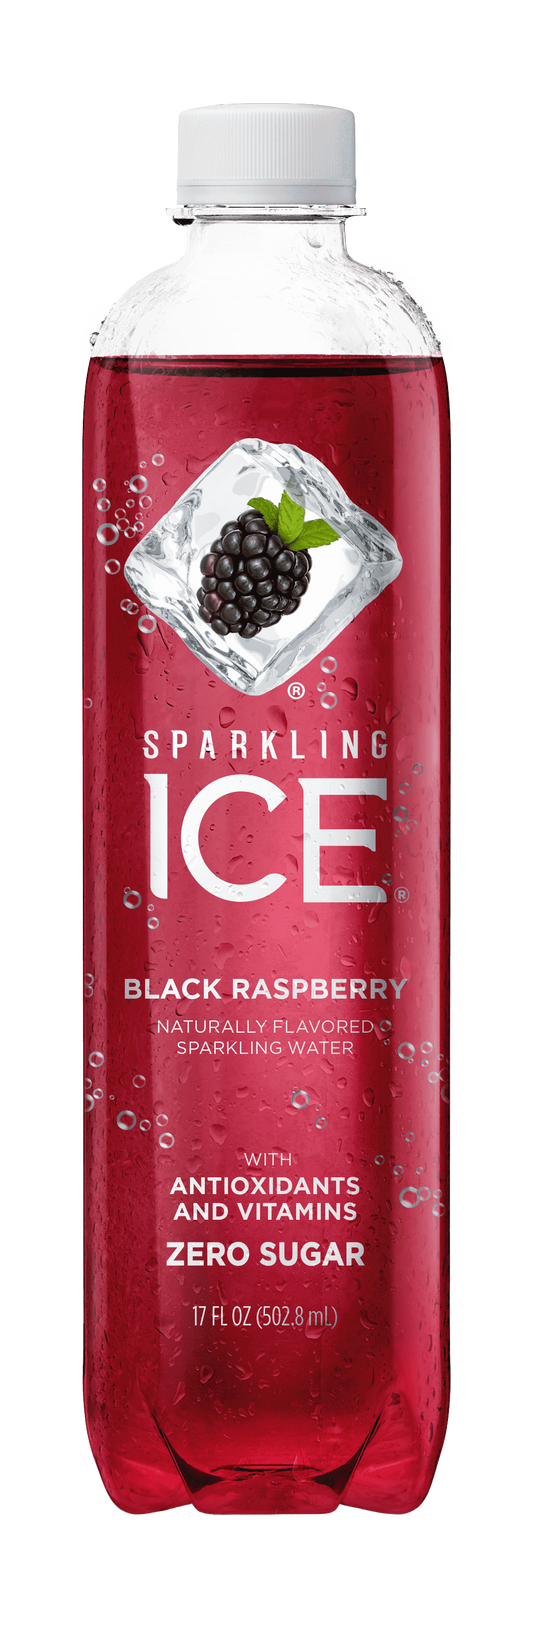 Ice Sparkling Water Black Raspberry - Asia Bazaar 